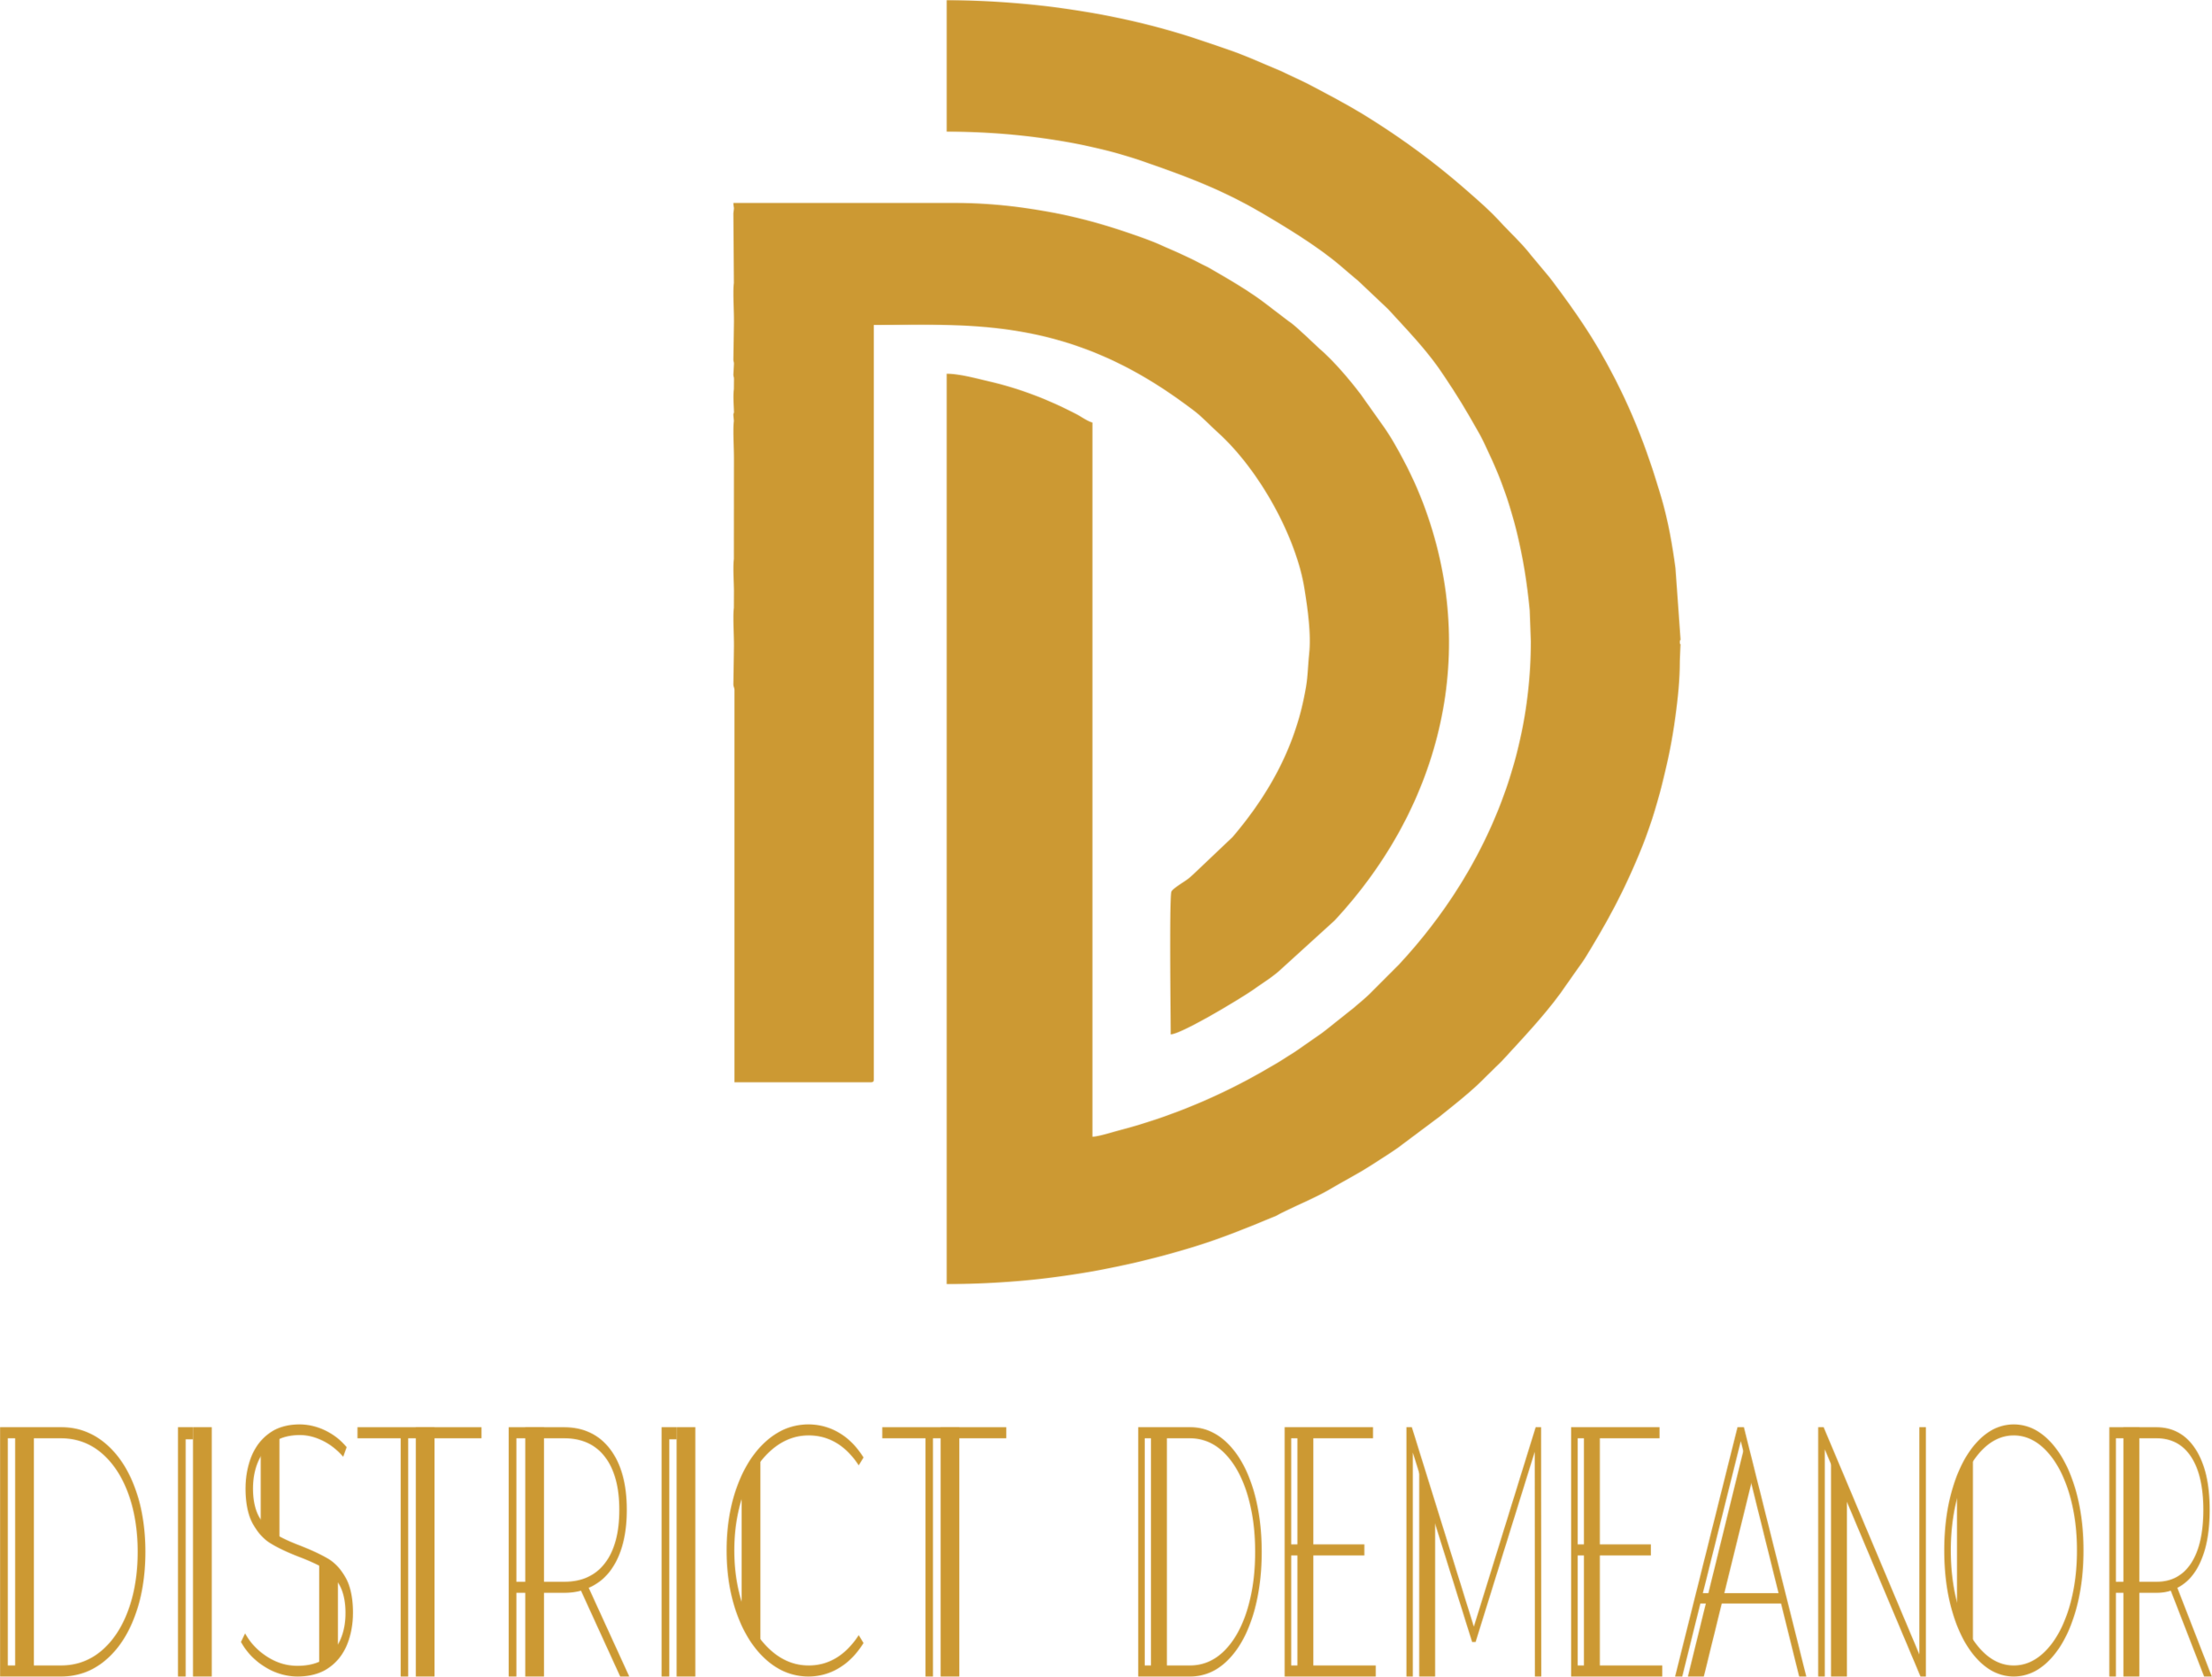 District Demeanor